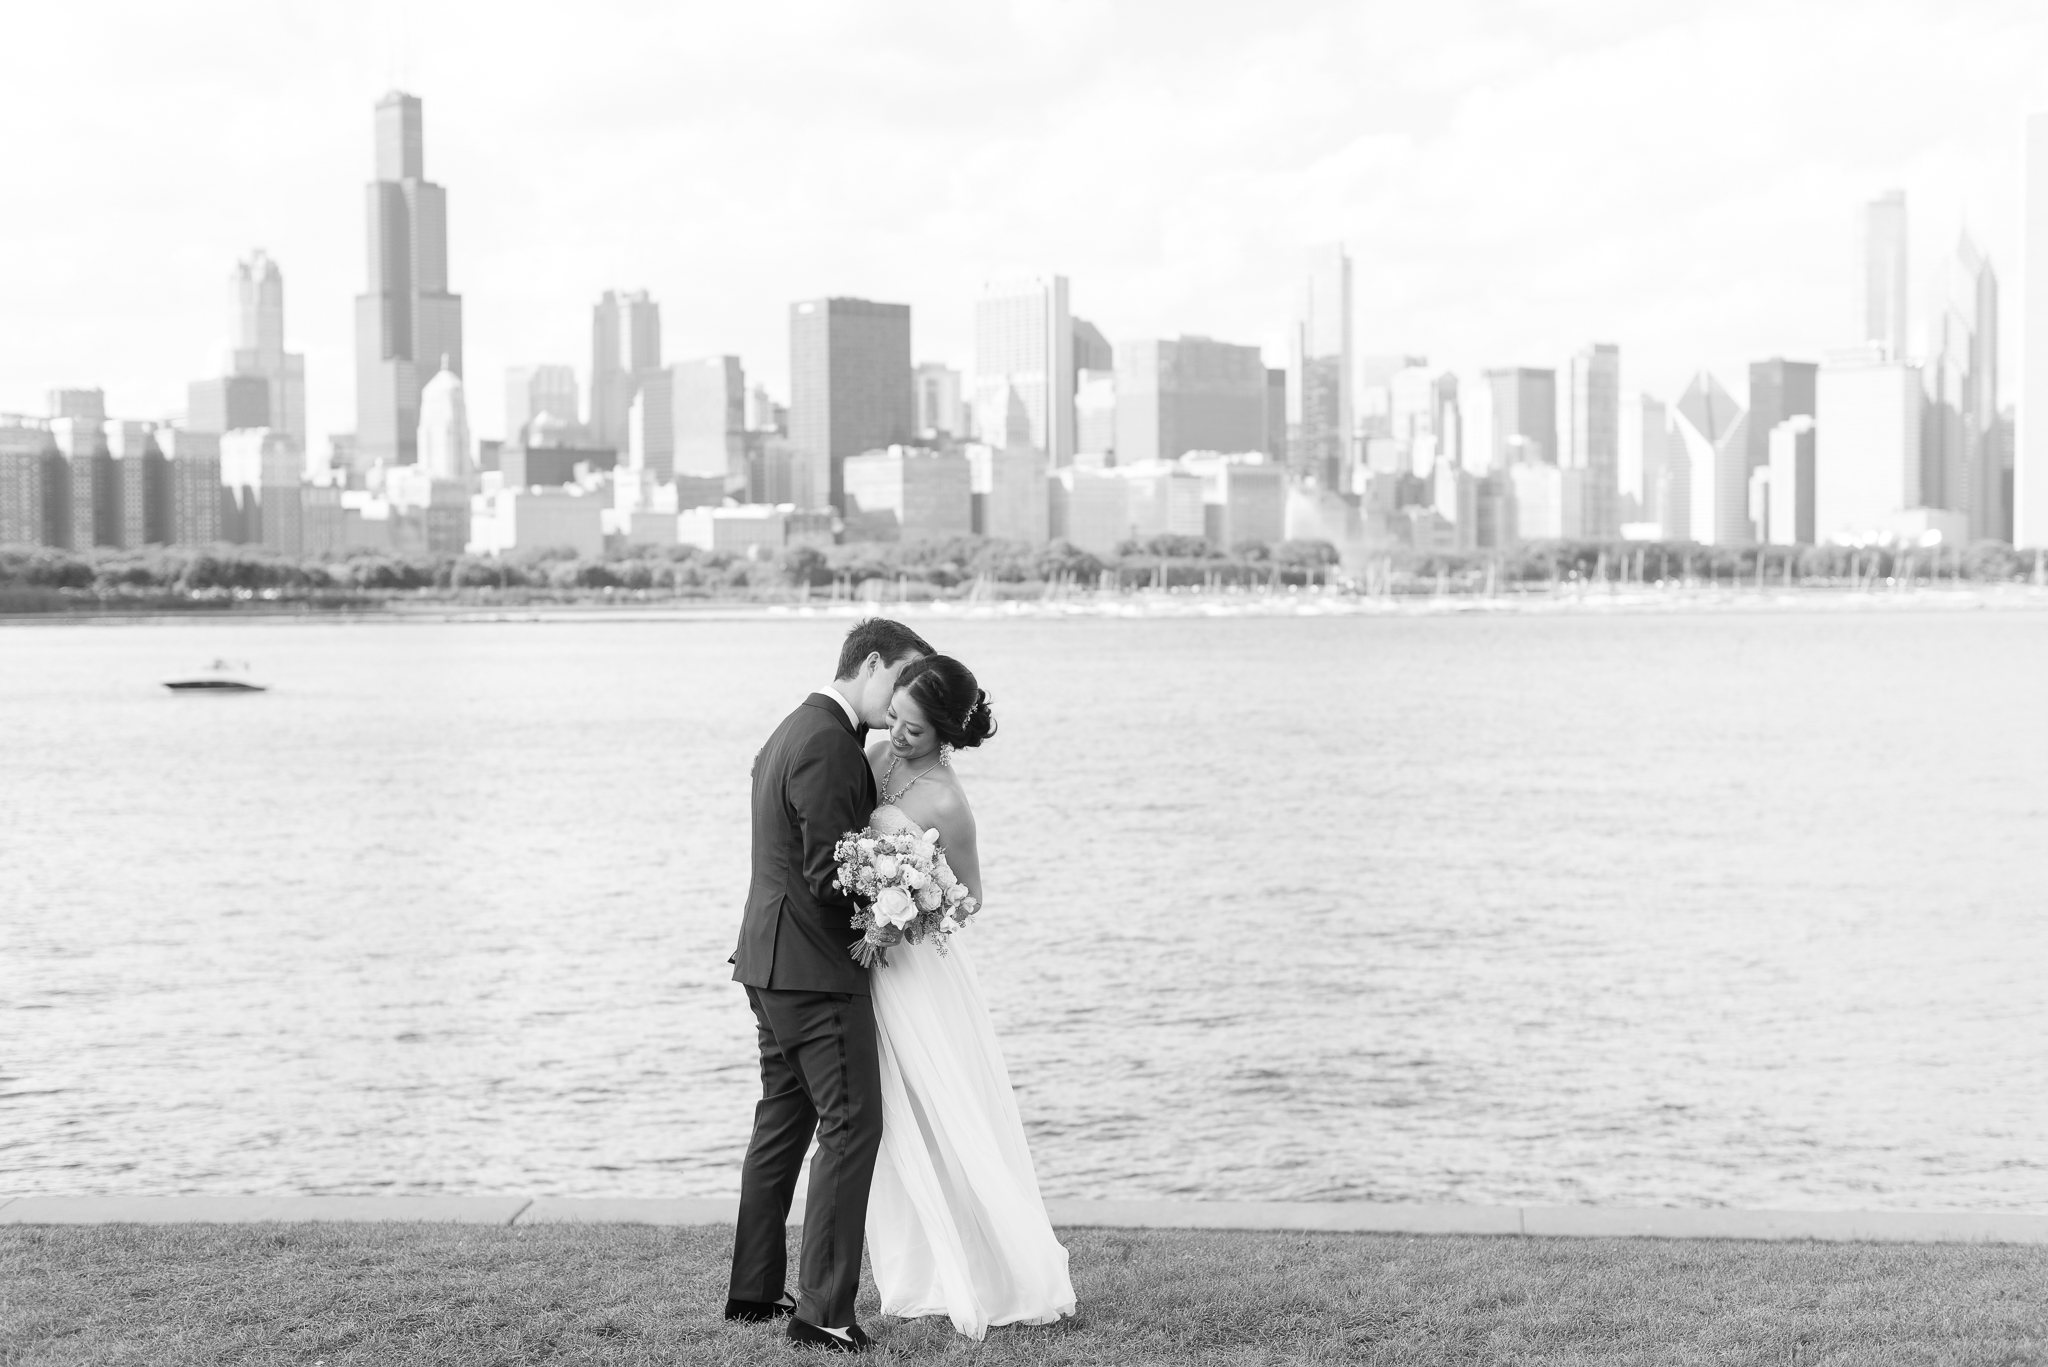 chicago wedding photos with chicago skyline - adler planetarium wedding photos